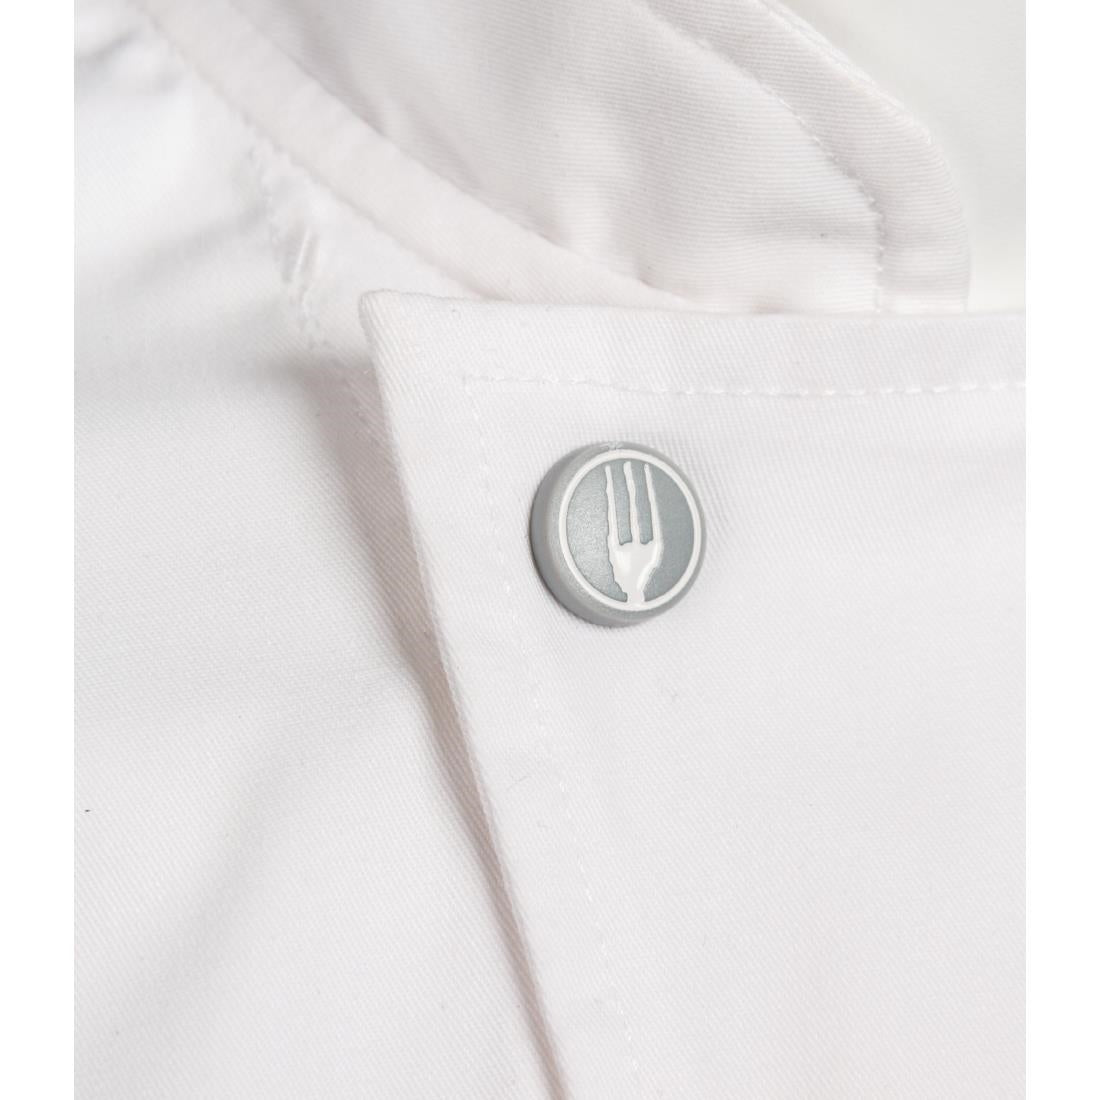 B205-L Chef Works Valais Signature Series Unisex Chefs Jacket White L